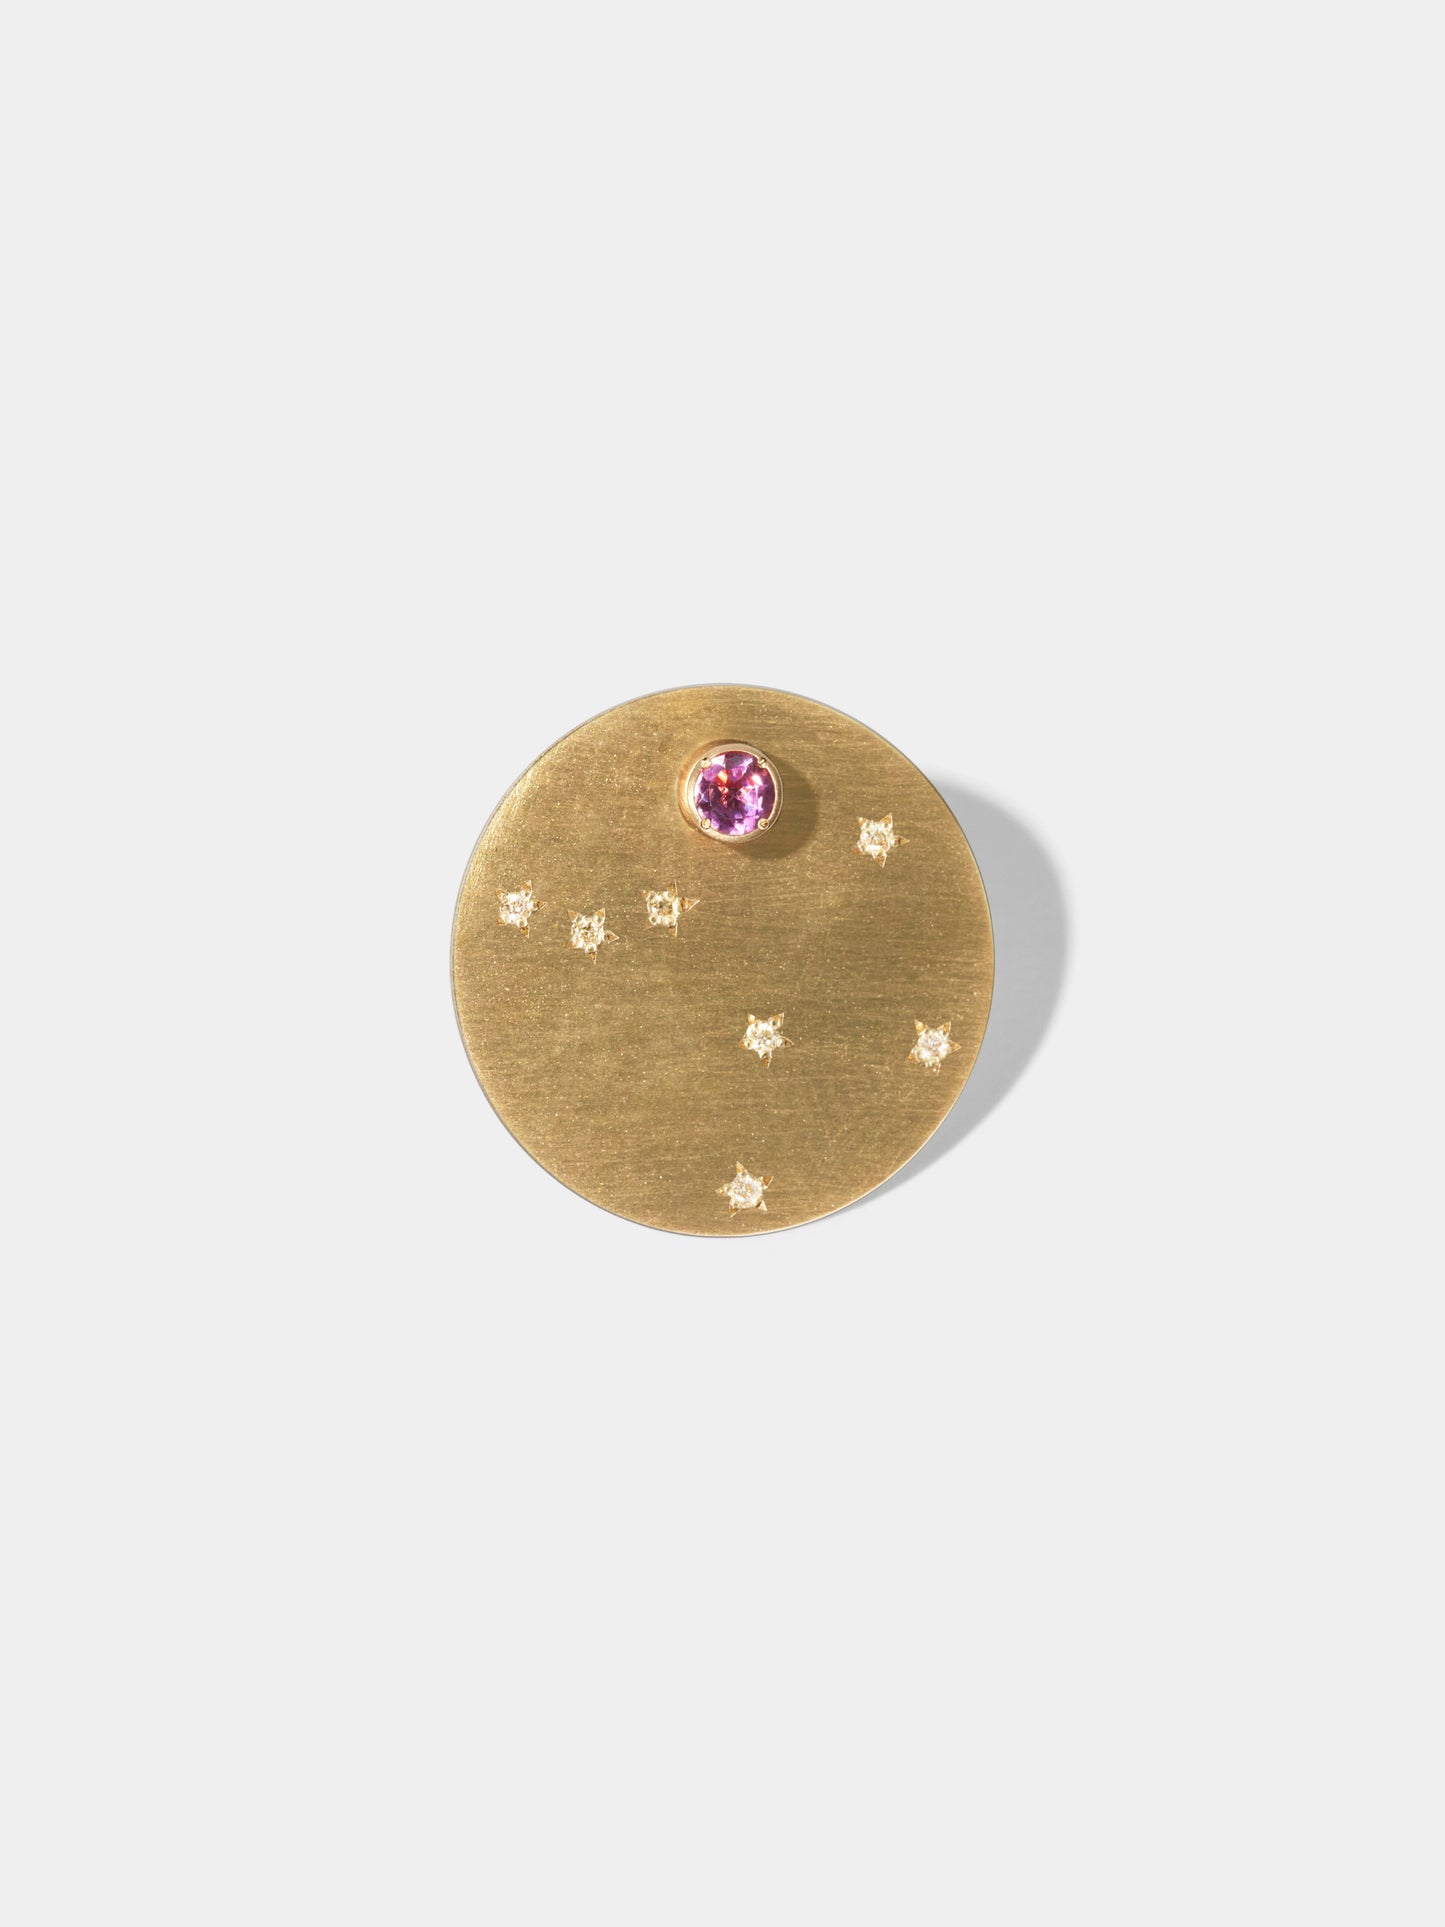 ASTERISM_Pierced Earring_Libra(天秤座) / Pink Tourmaline